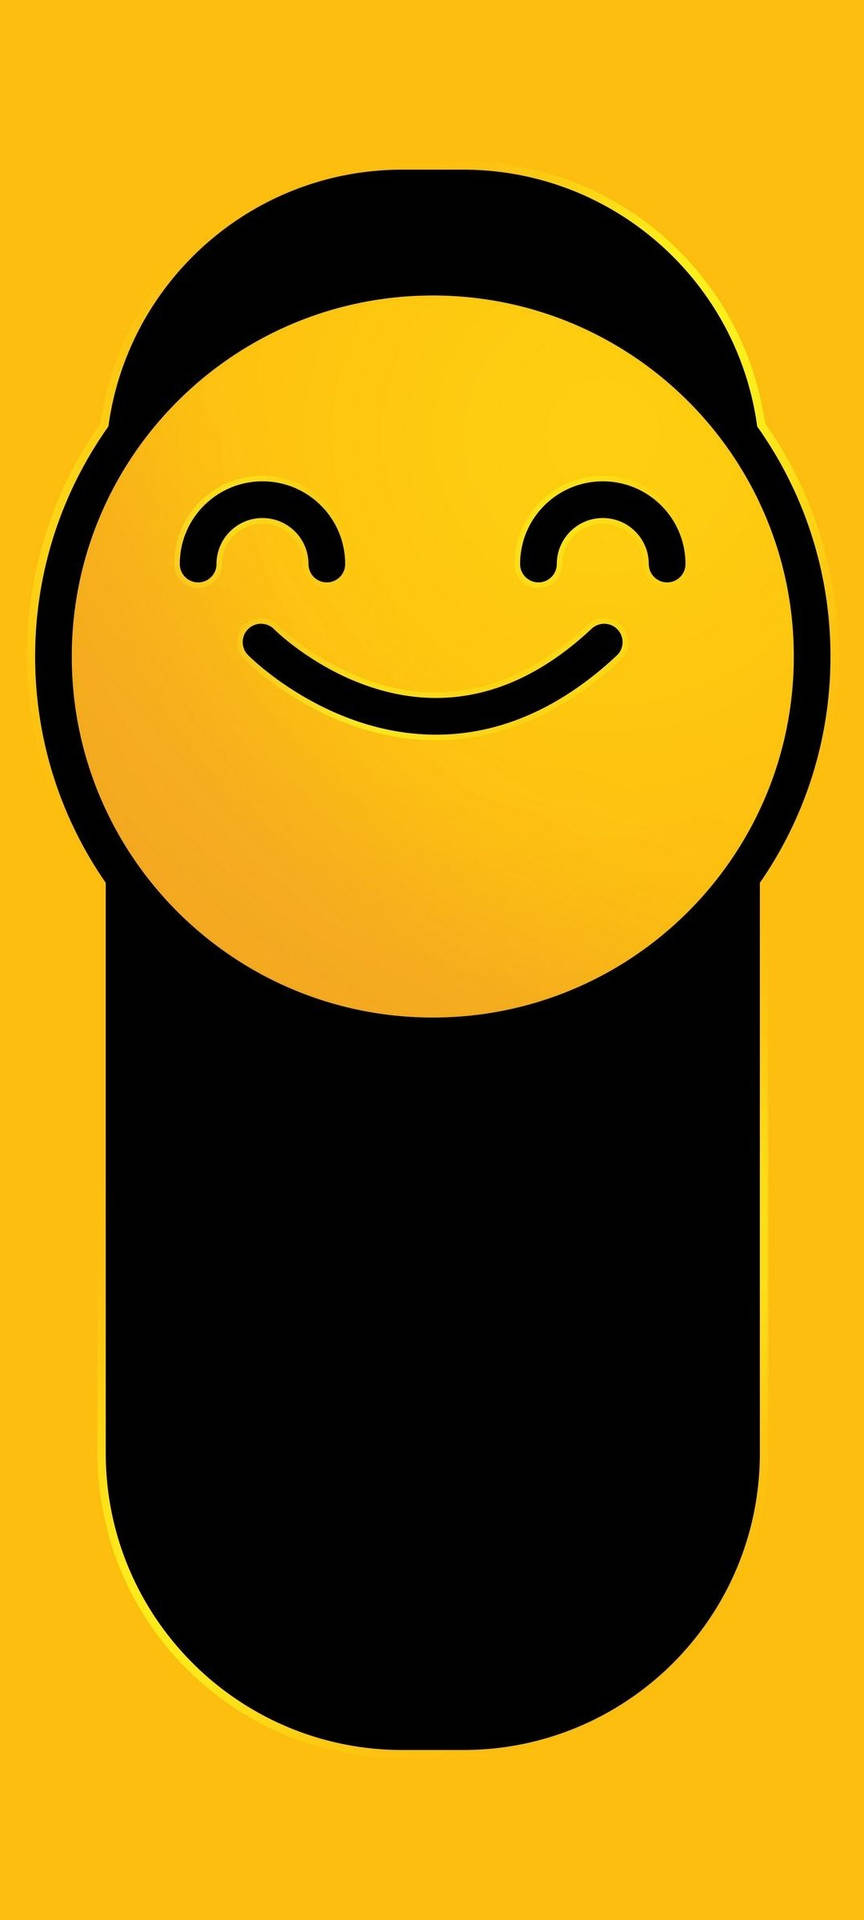 SpongeBob smiley face Wallpaper 4K, Yellow background, #9386